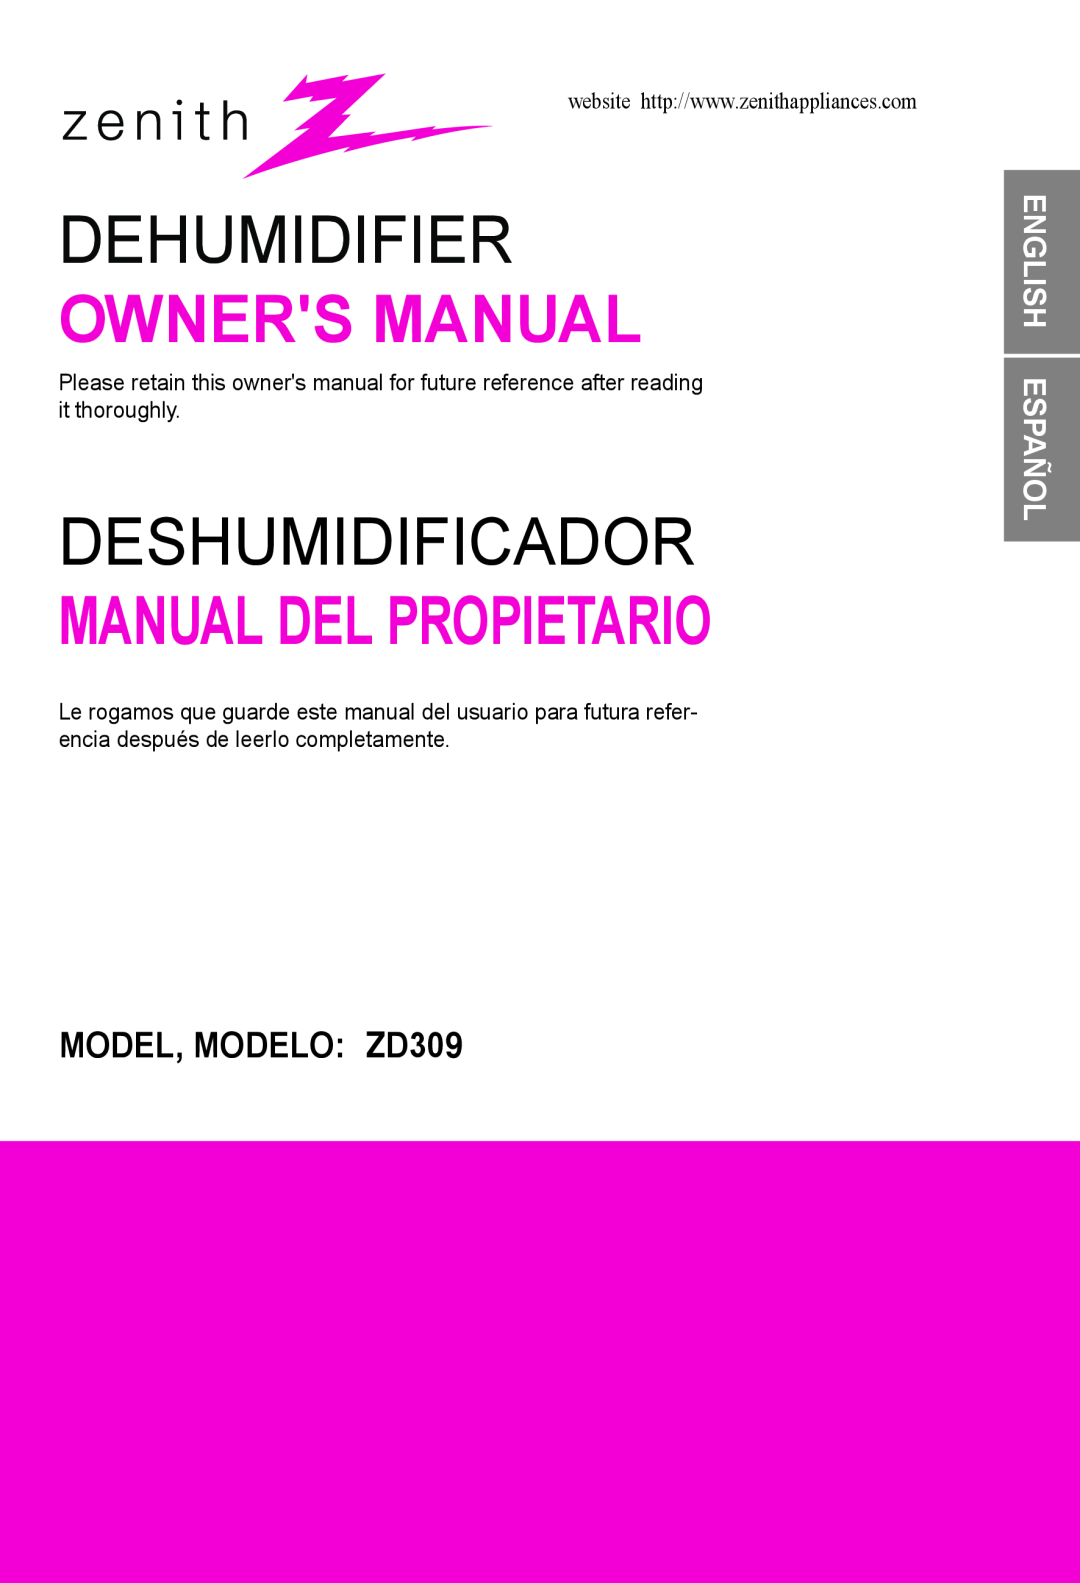 Zenith owner manual English Español, Dehumidifier, Deshumidificador, Manual Del Propietario, MODEL, MODELO ZD309 